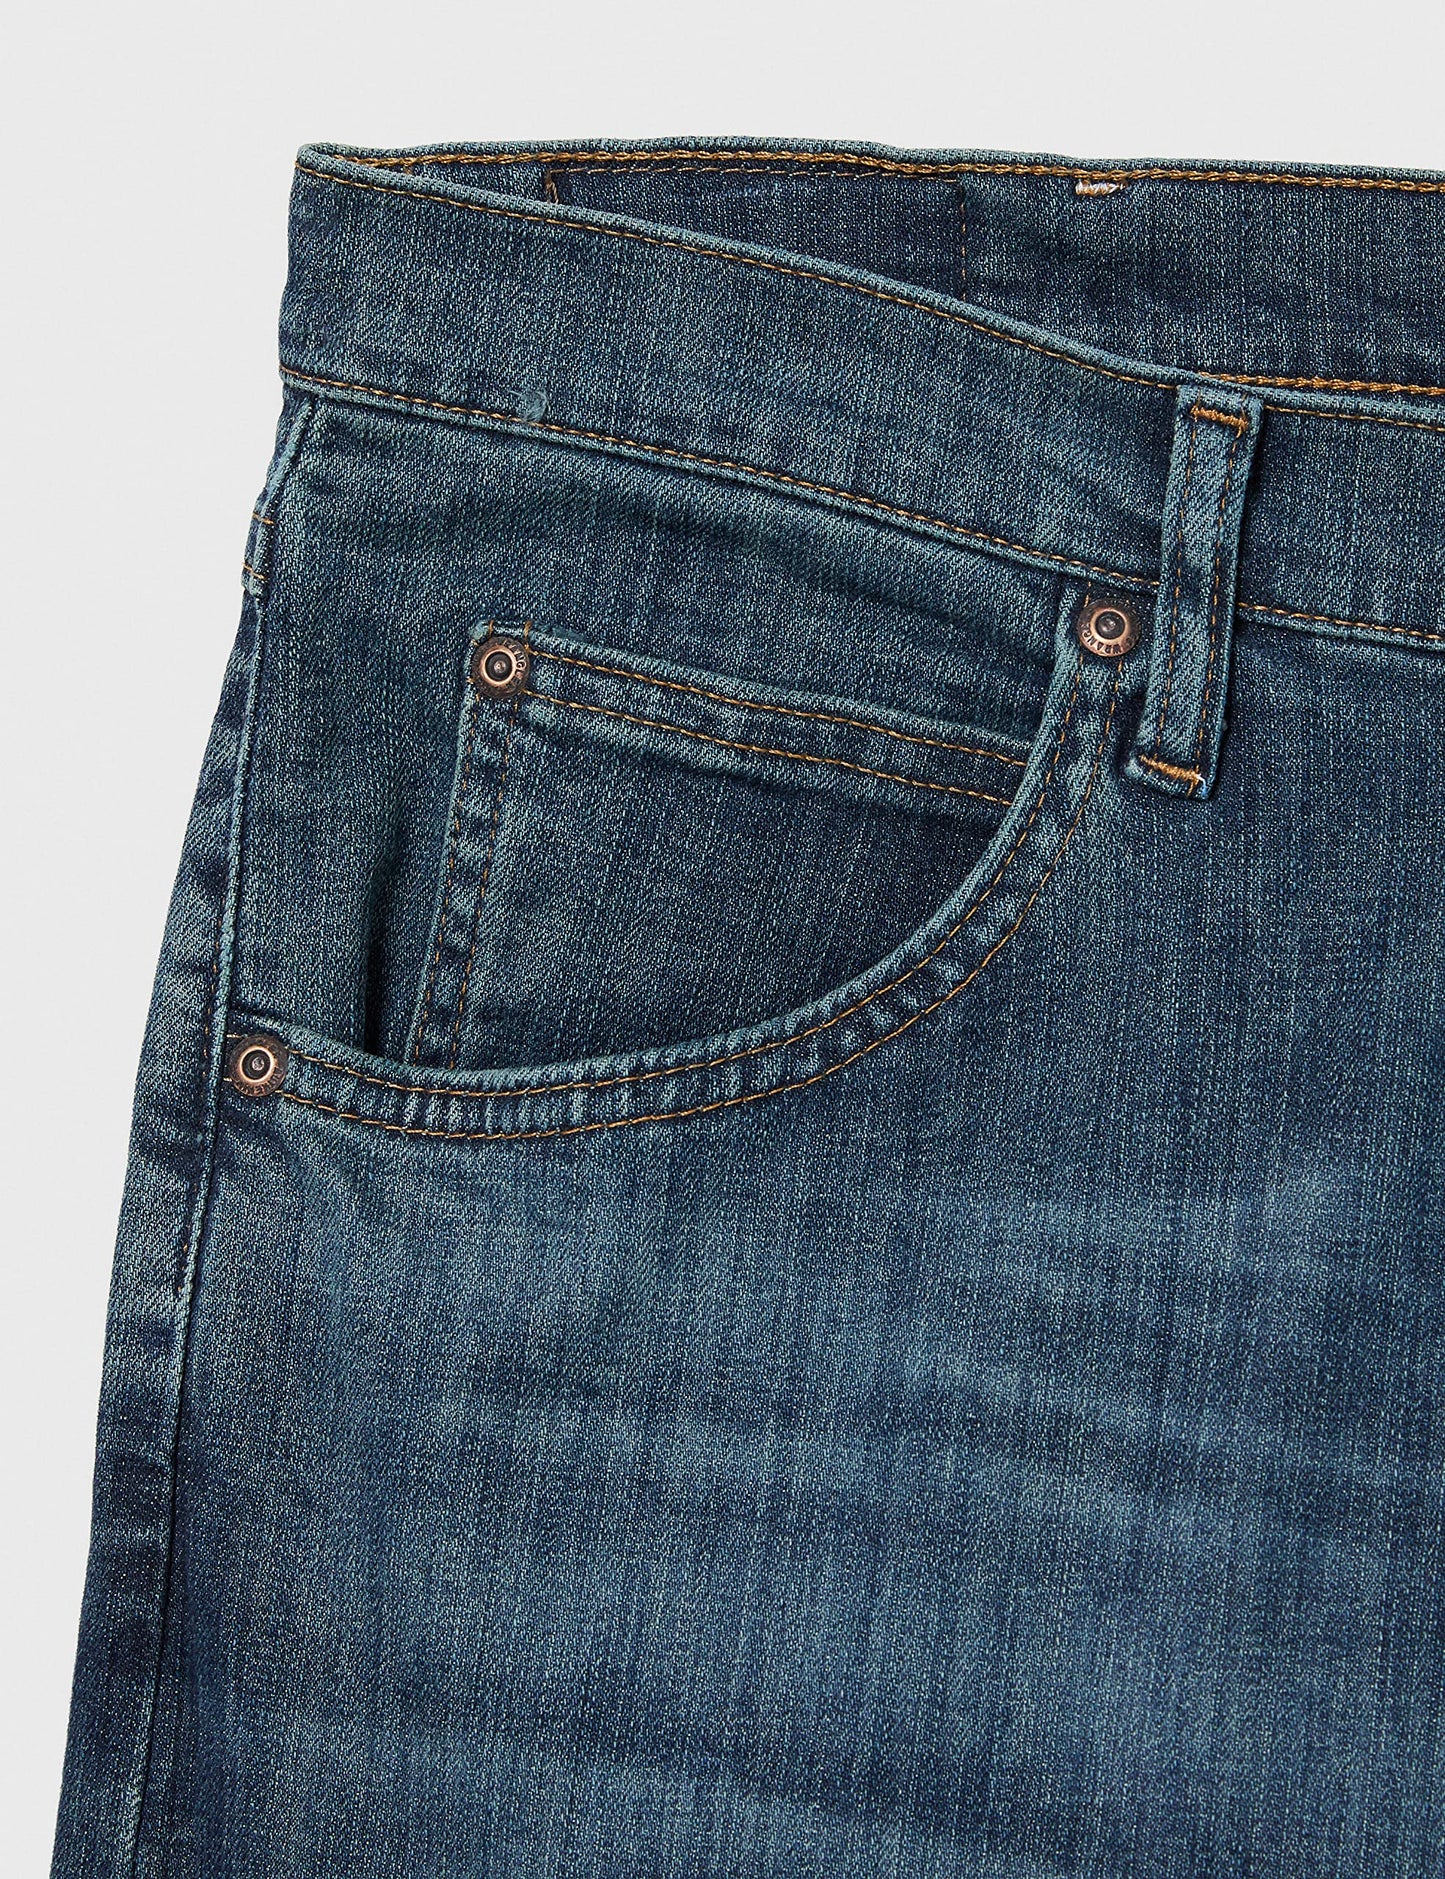 Wrangler Authentics Men's Classic 5-Pocket Regular Fit Jean, Twilight Flex, 37W x 32L